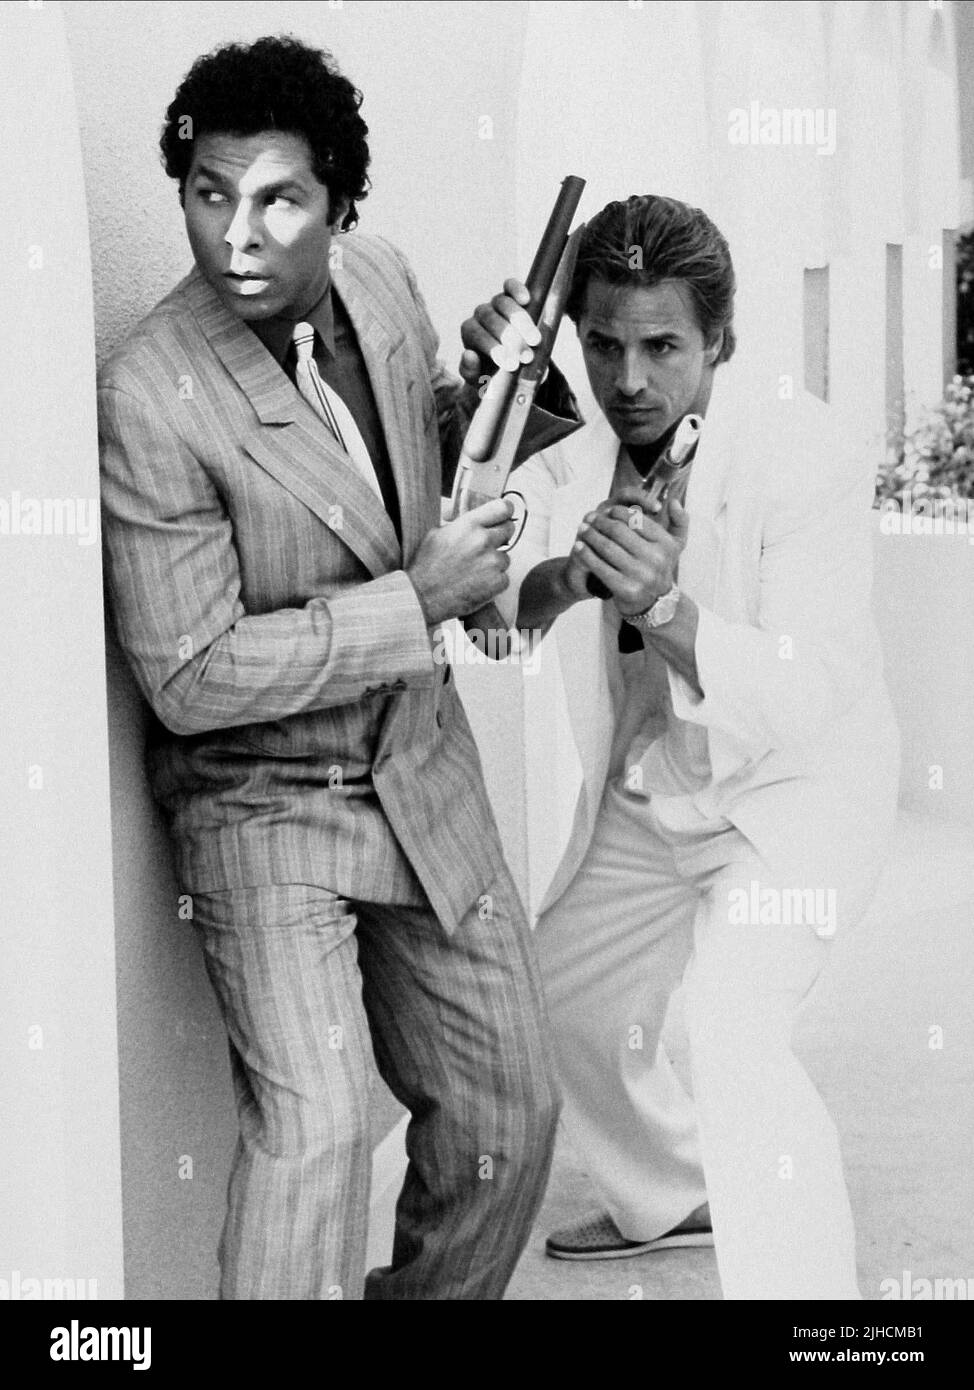 PHILIP MICHAEL THOMAS, DON JOHNSON, MIAMI VICE, 1984 Stock Photo